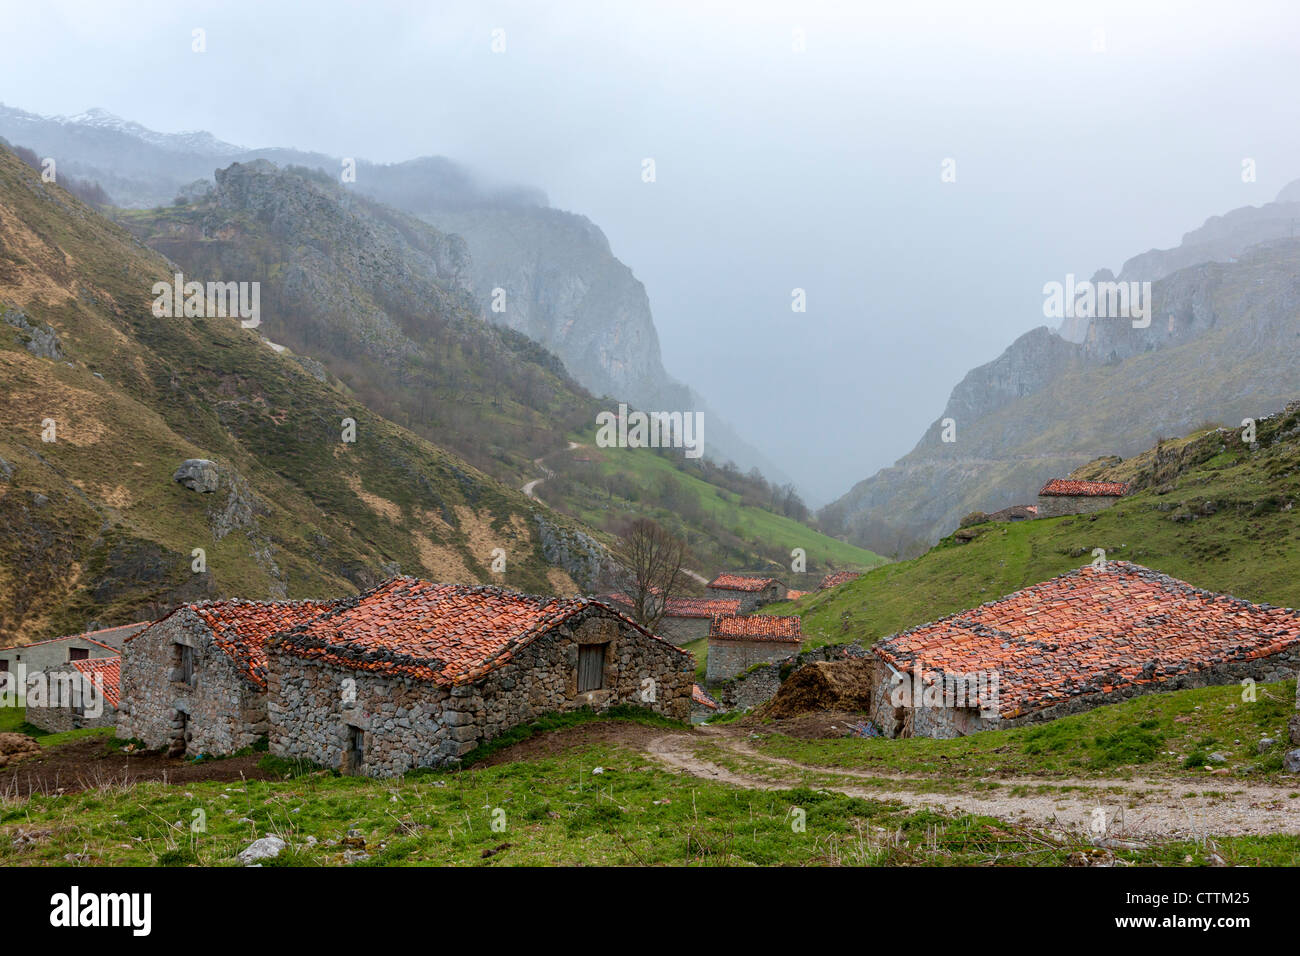 Invernales del Texu near Sotres, Picos de Europa National Park, Asturias, Spain Stock Photo